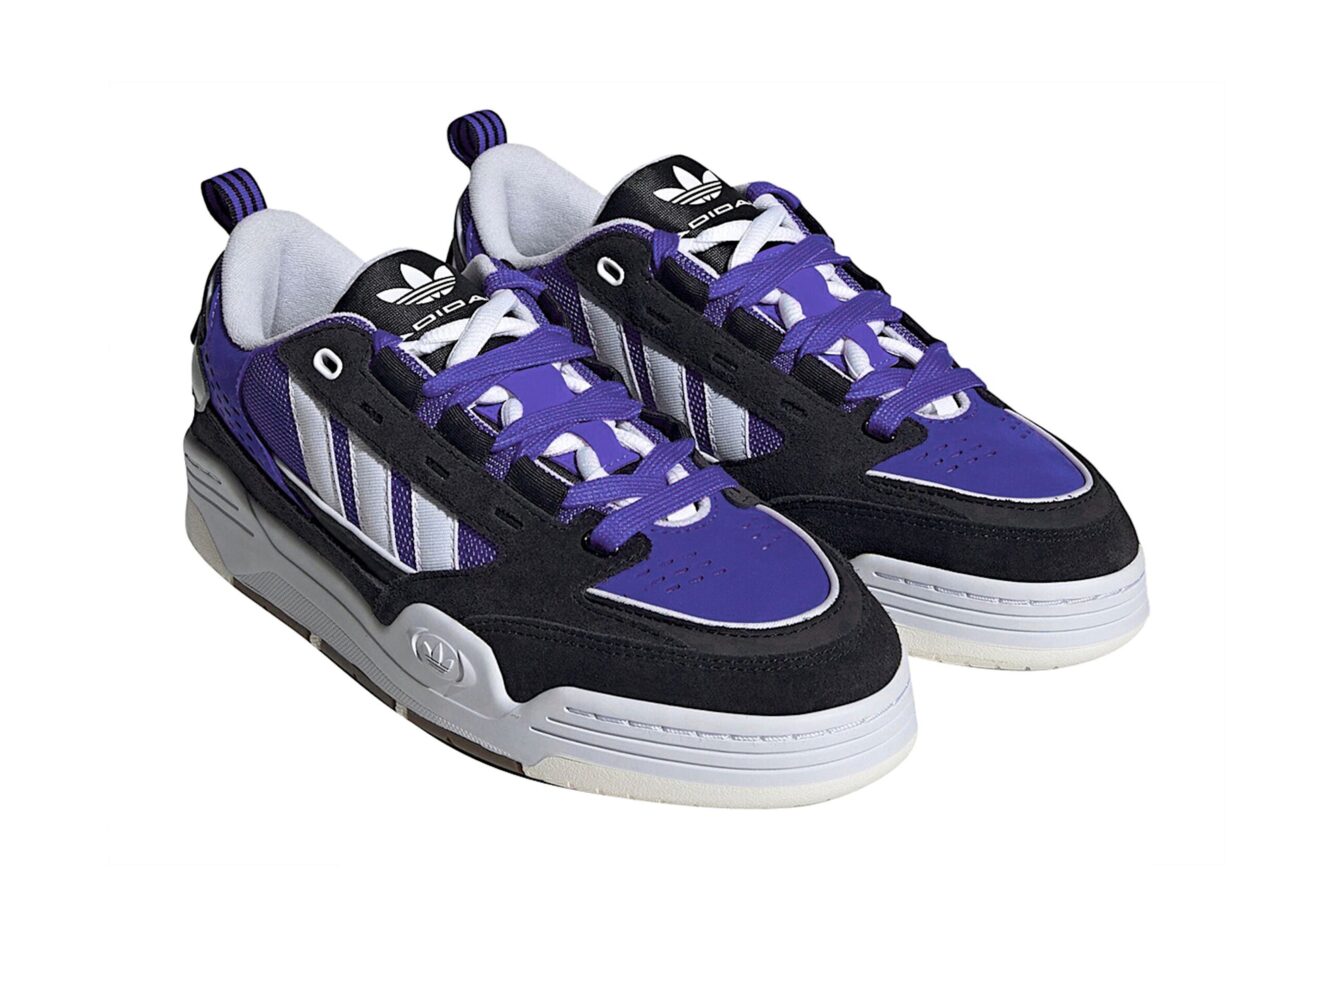 adidas adi2000 purple black white GZ6201 купить